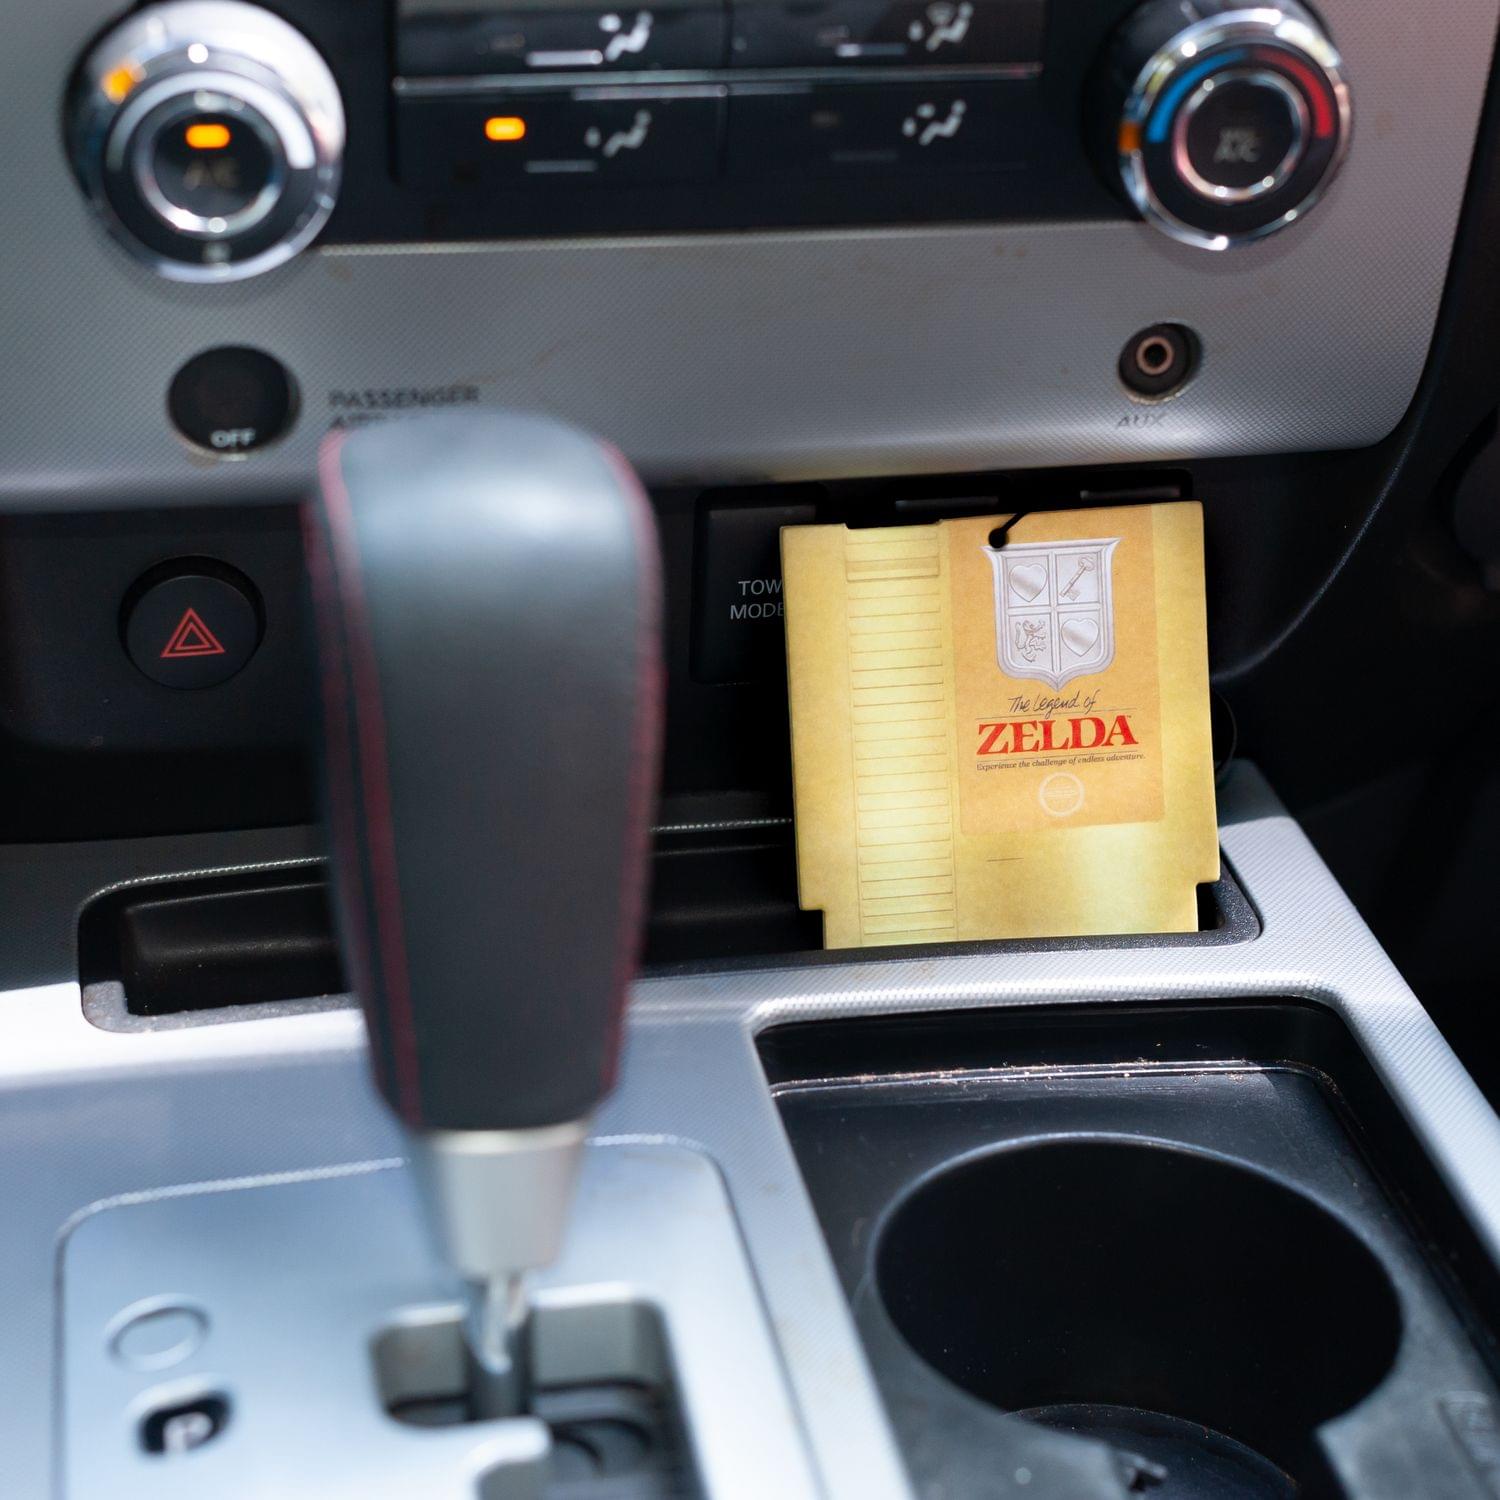 The Legend Of Zelda Official NES Cartridge Air Freshener | New Car Scent